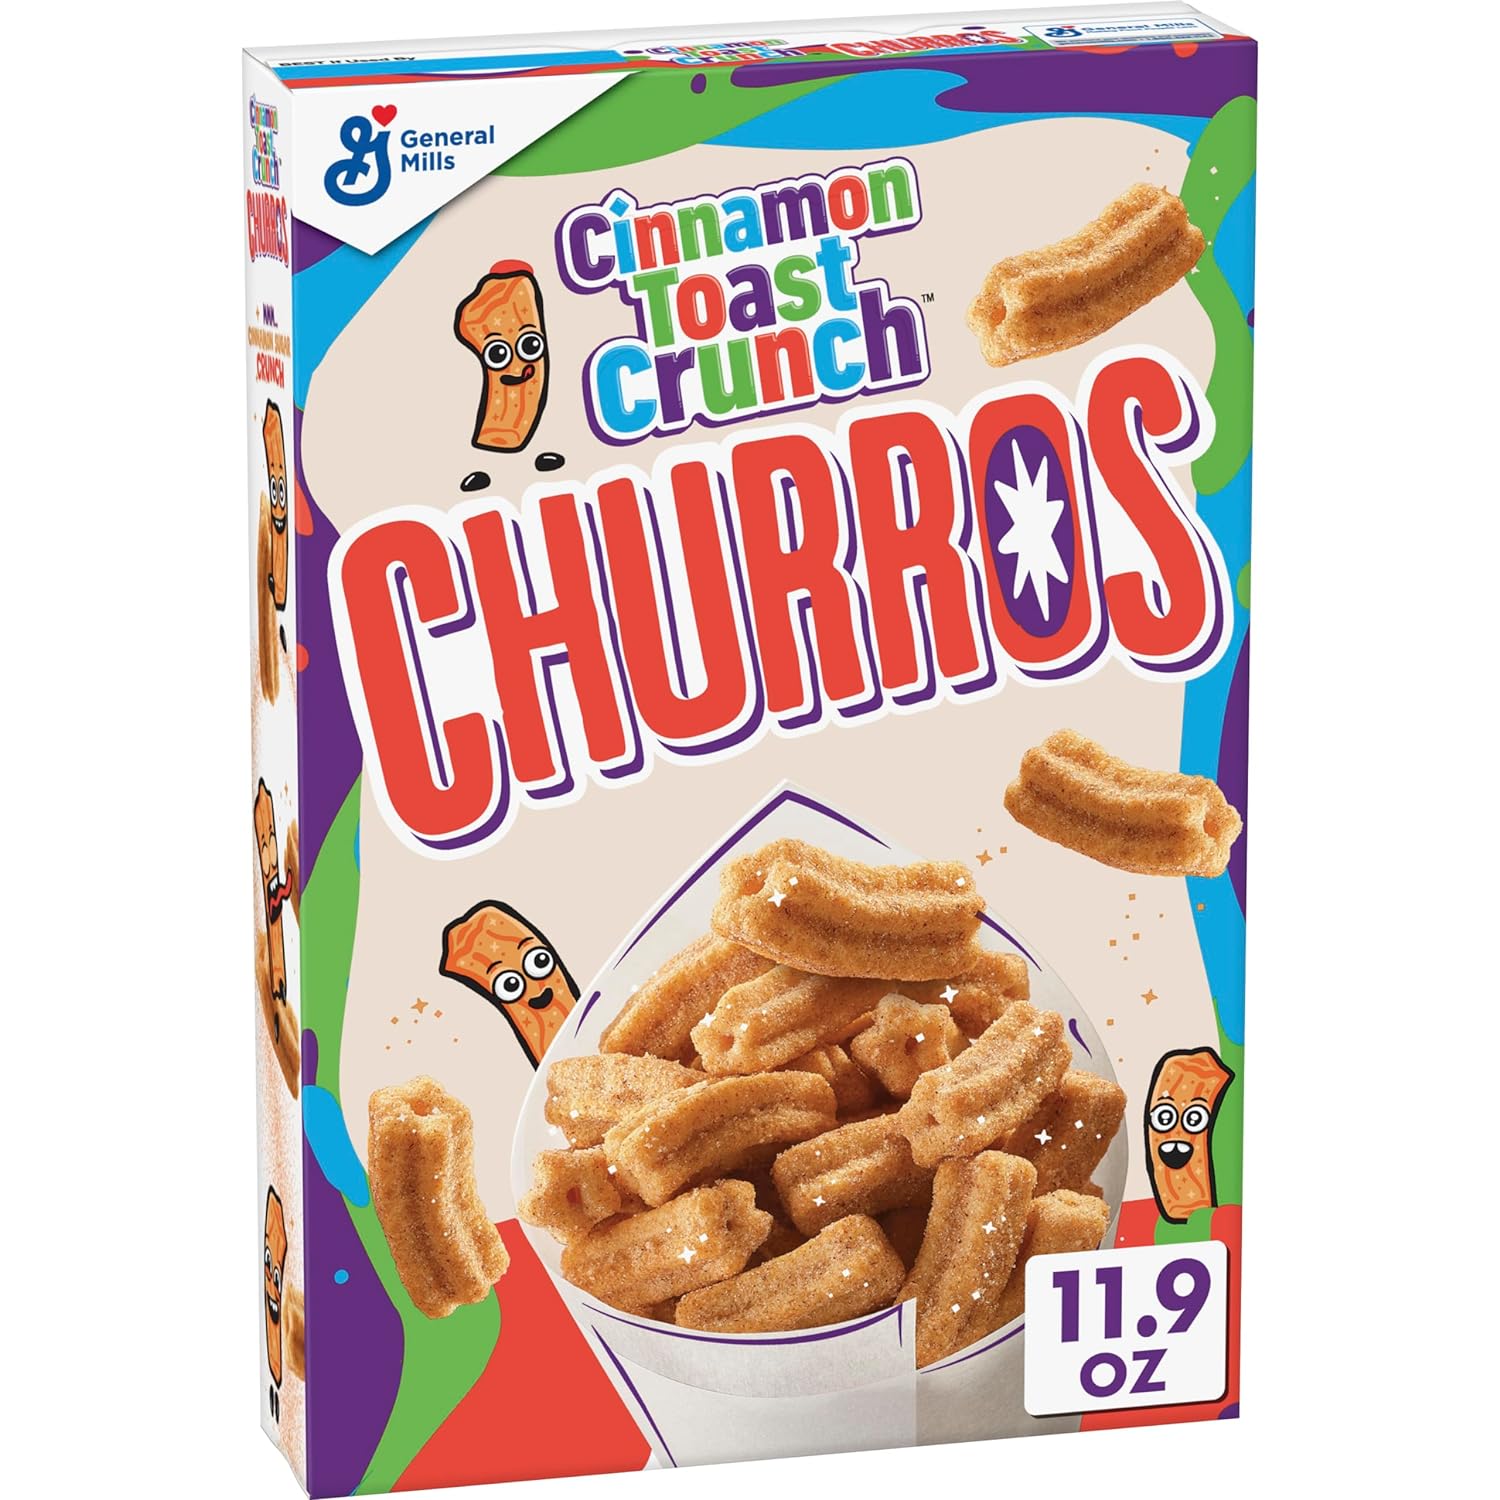 Churros Cinnamon Toast Crunch Breakfast Cereal, 11.9 OZ Cereal Box